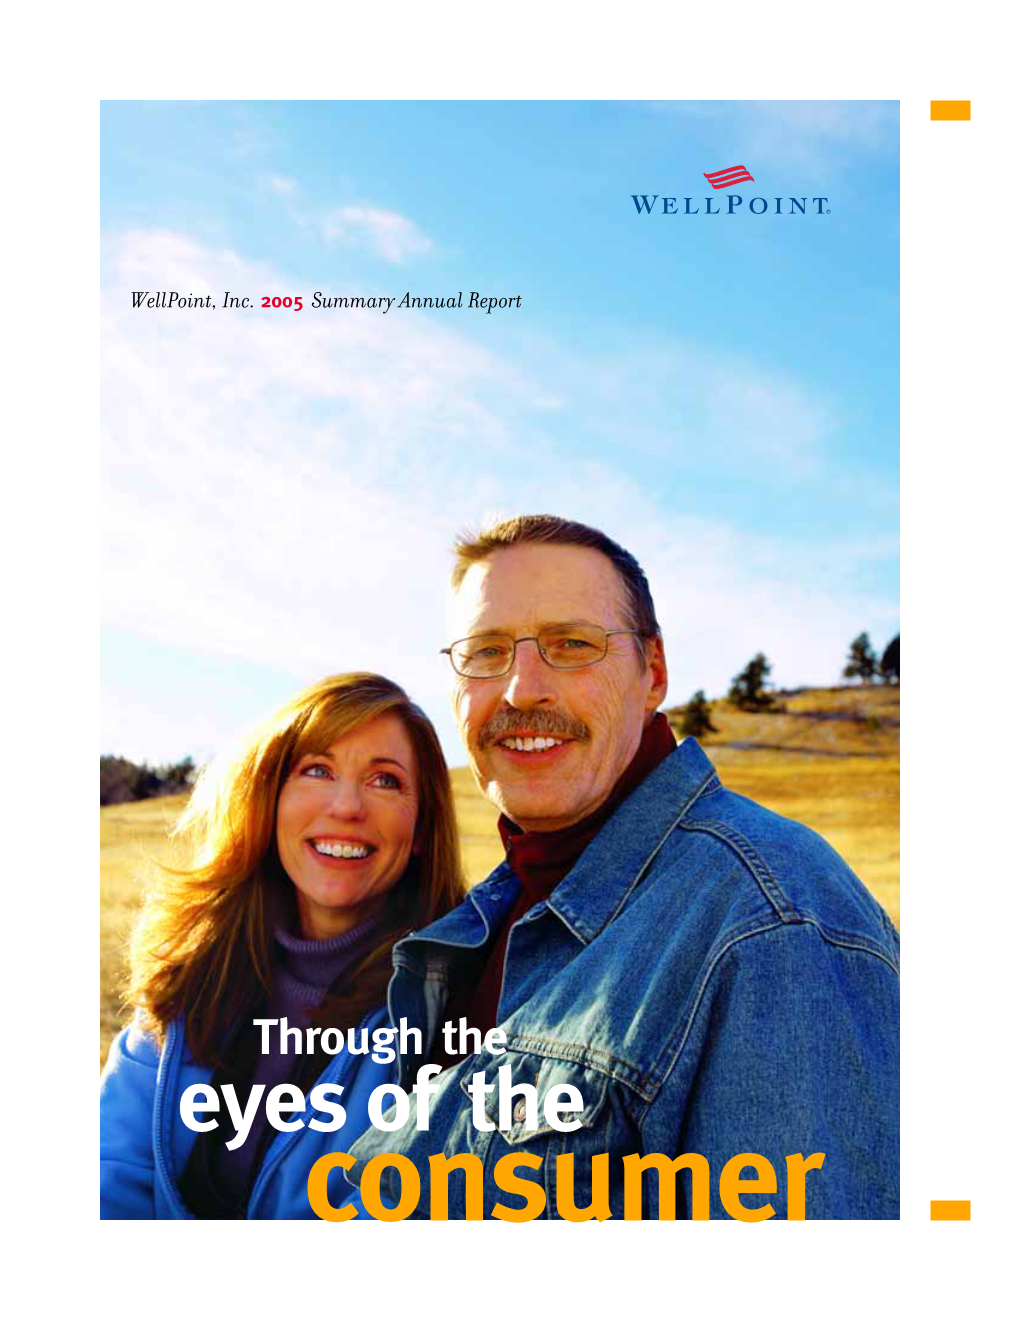 Wellpoint, Inc. 2005 Summary Annual Report